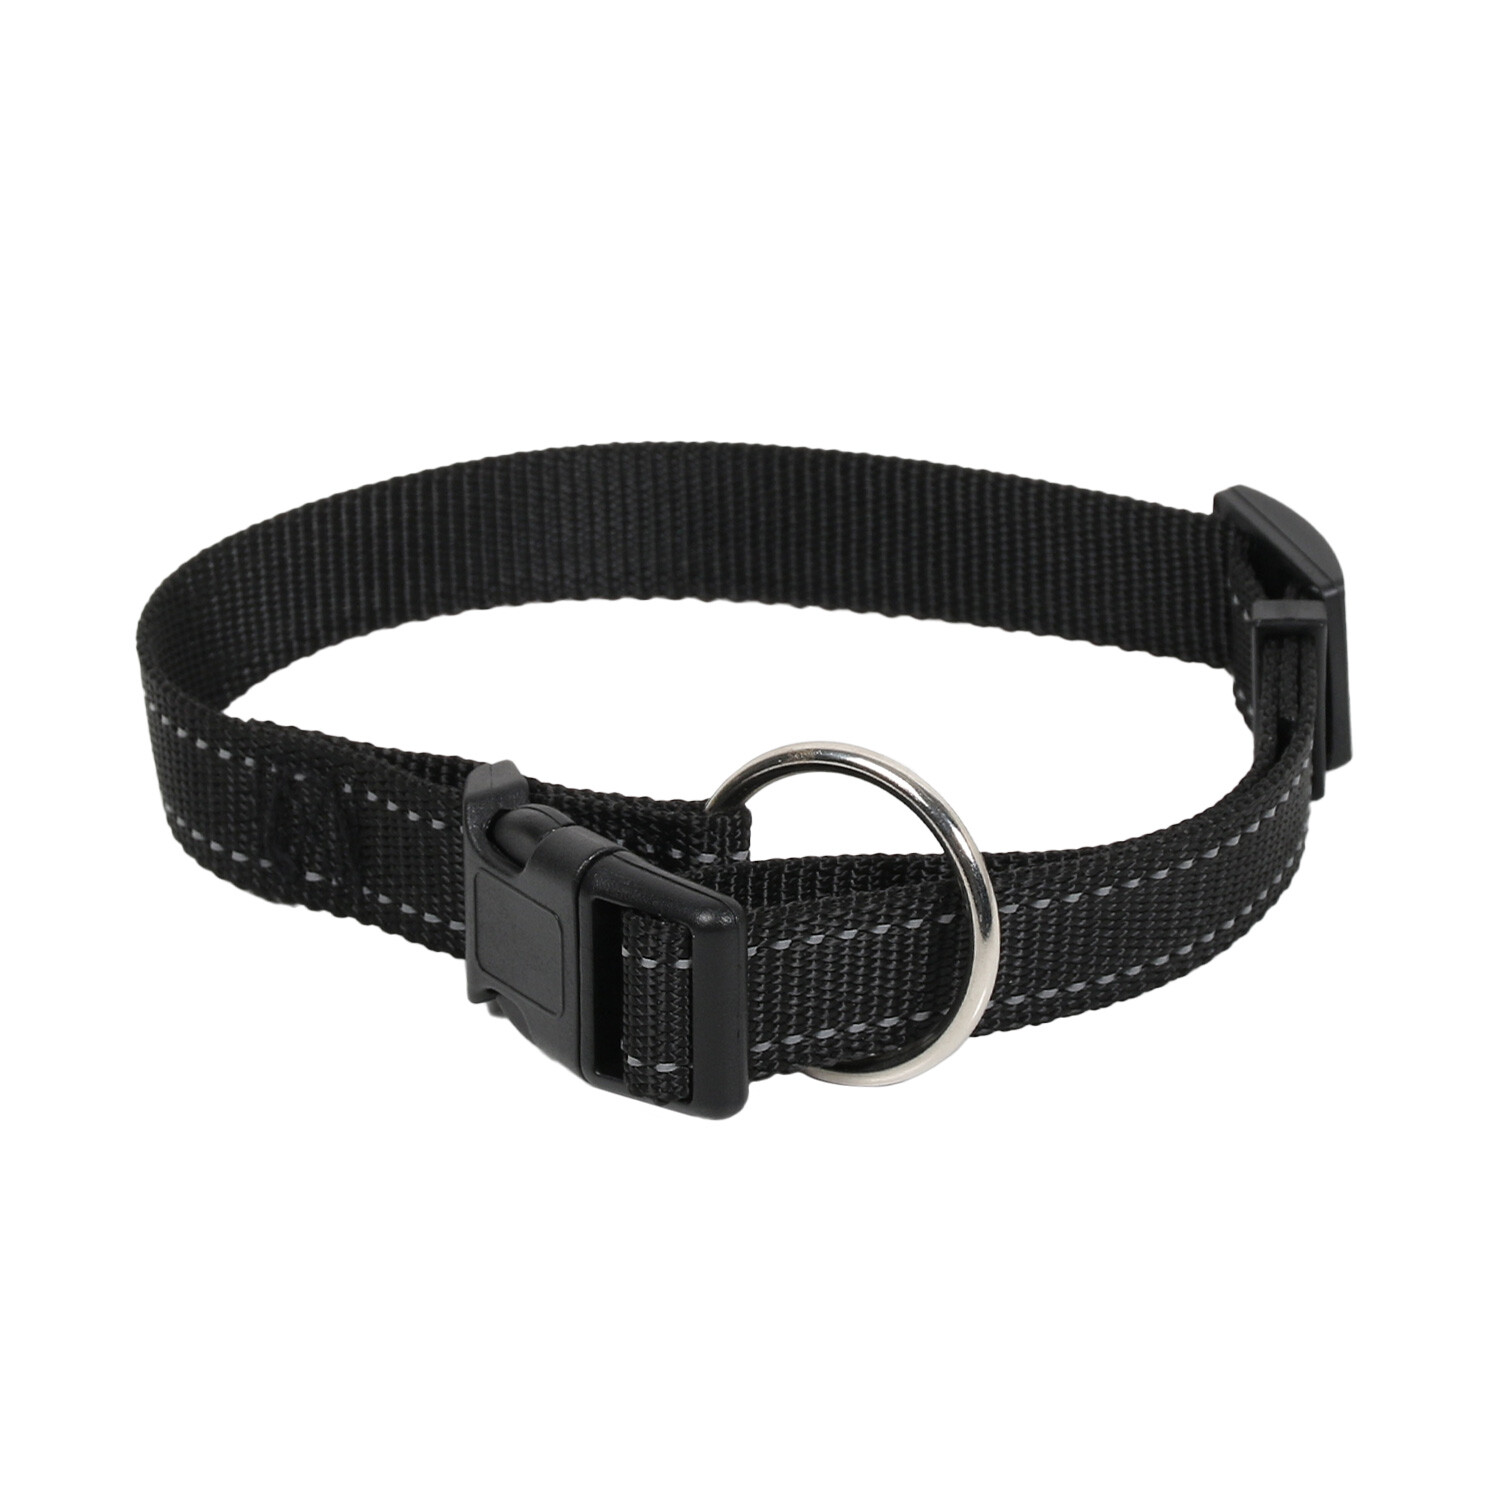 Reflective Nylon Dog Collar - Black / Small Image 1